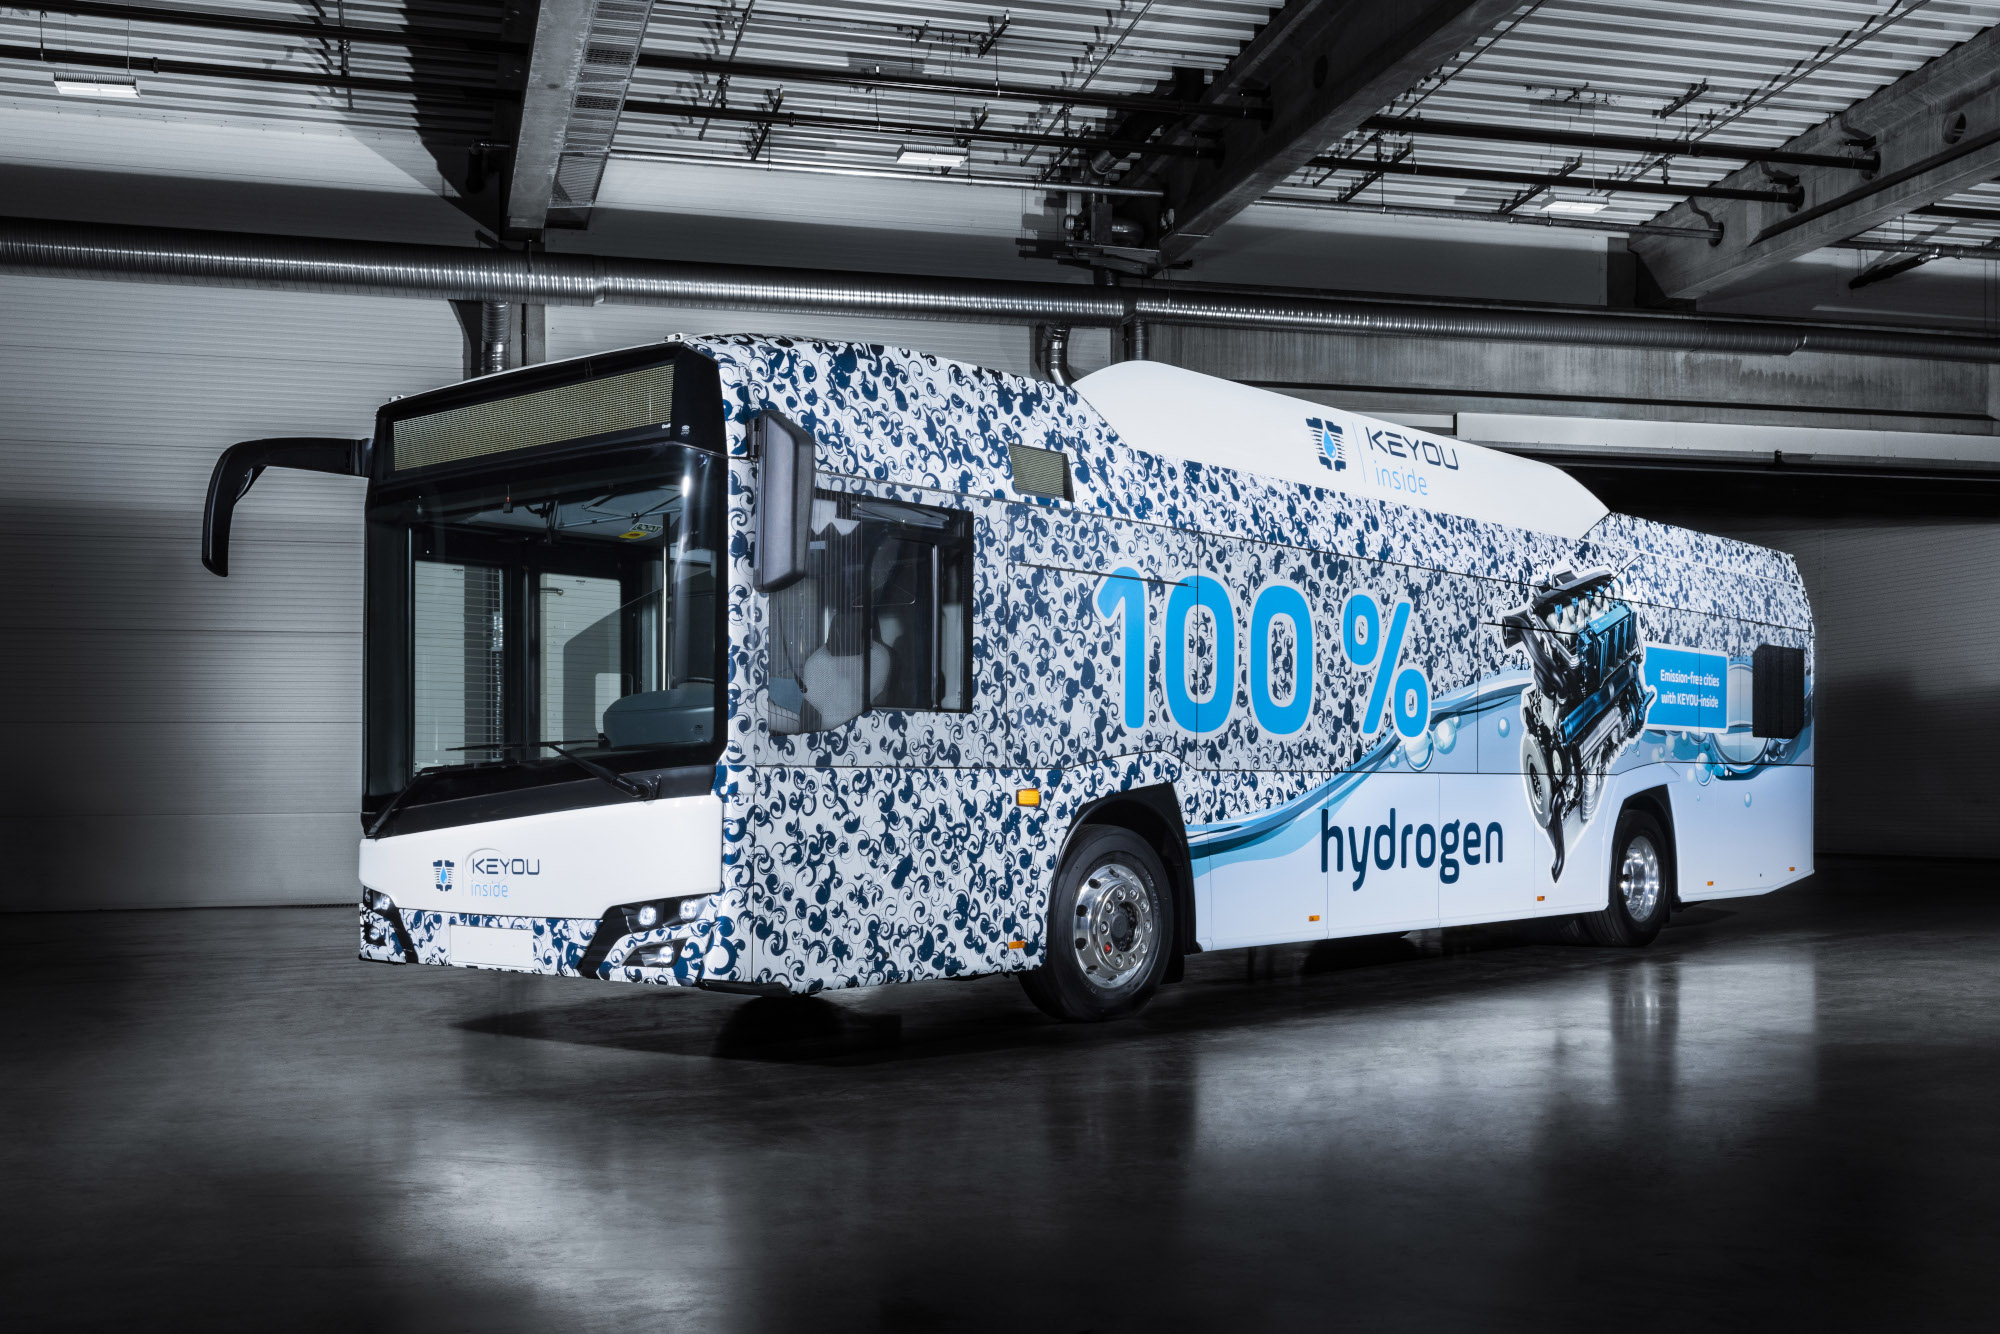 Voith Keyou hydrogen bus